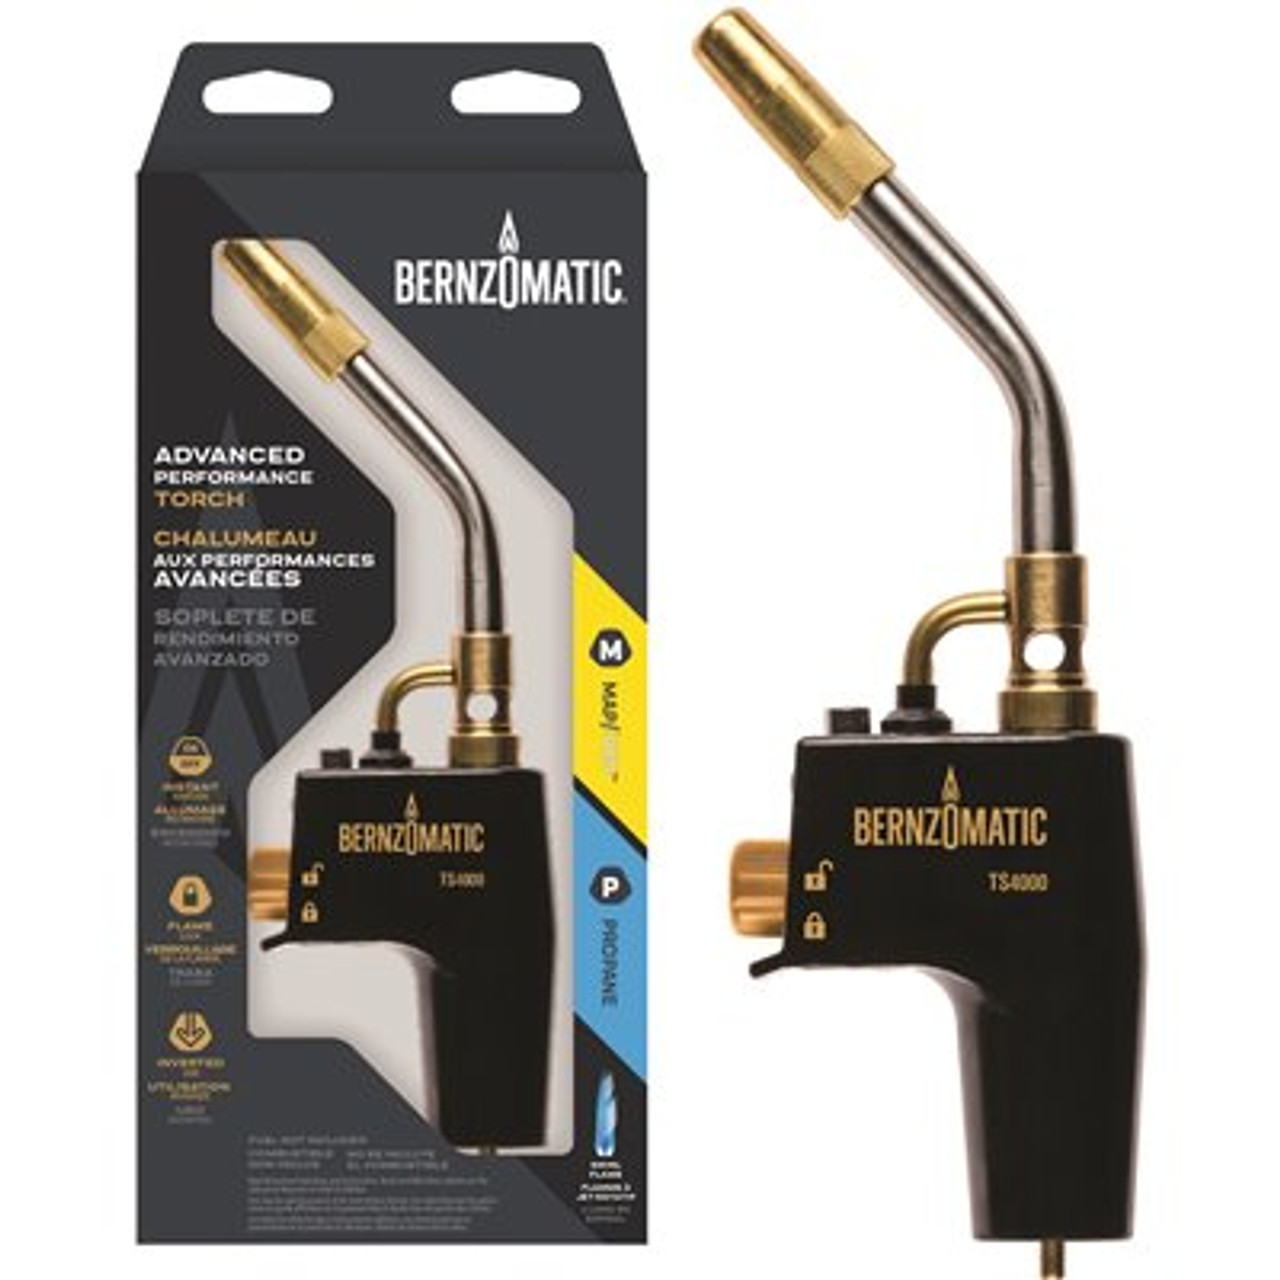 Bernzomatic Trigger Start Torch Head - 202185055